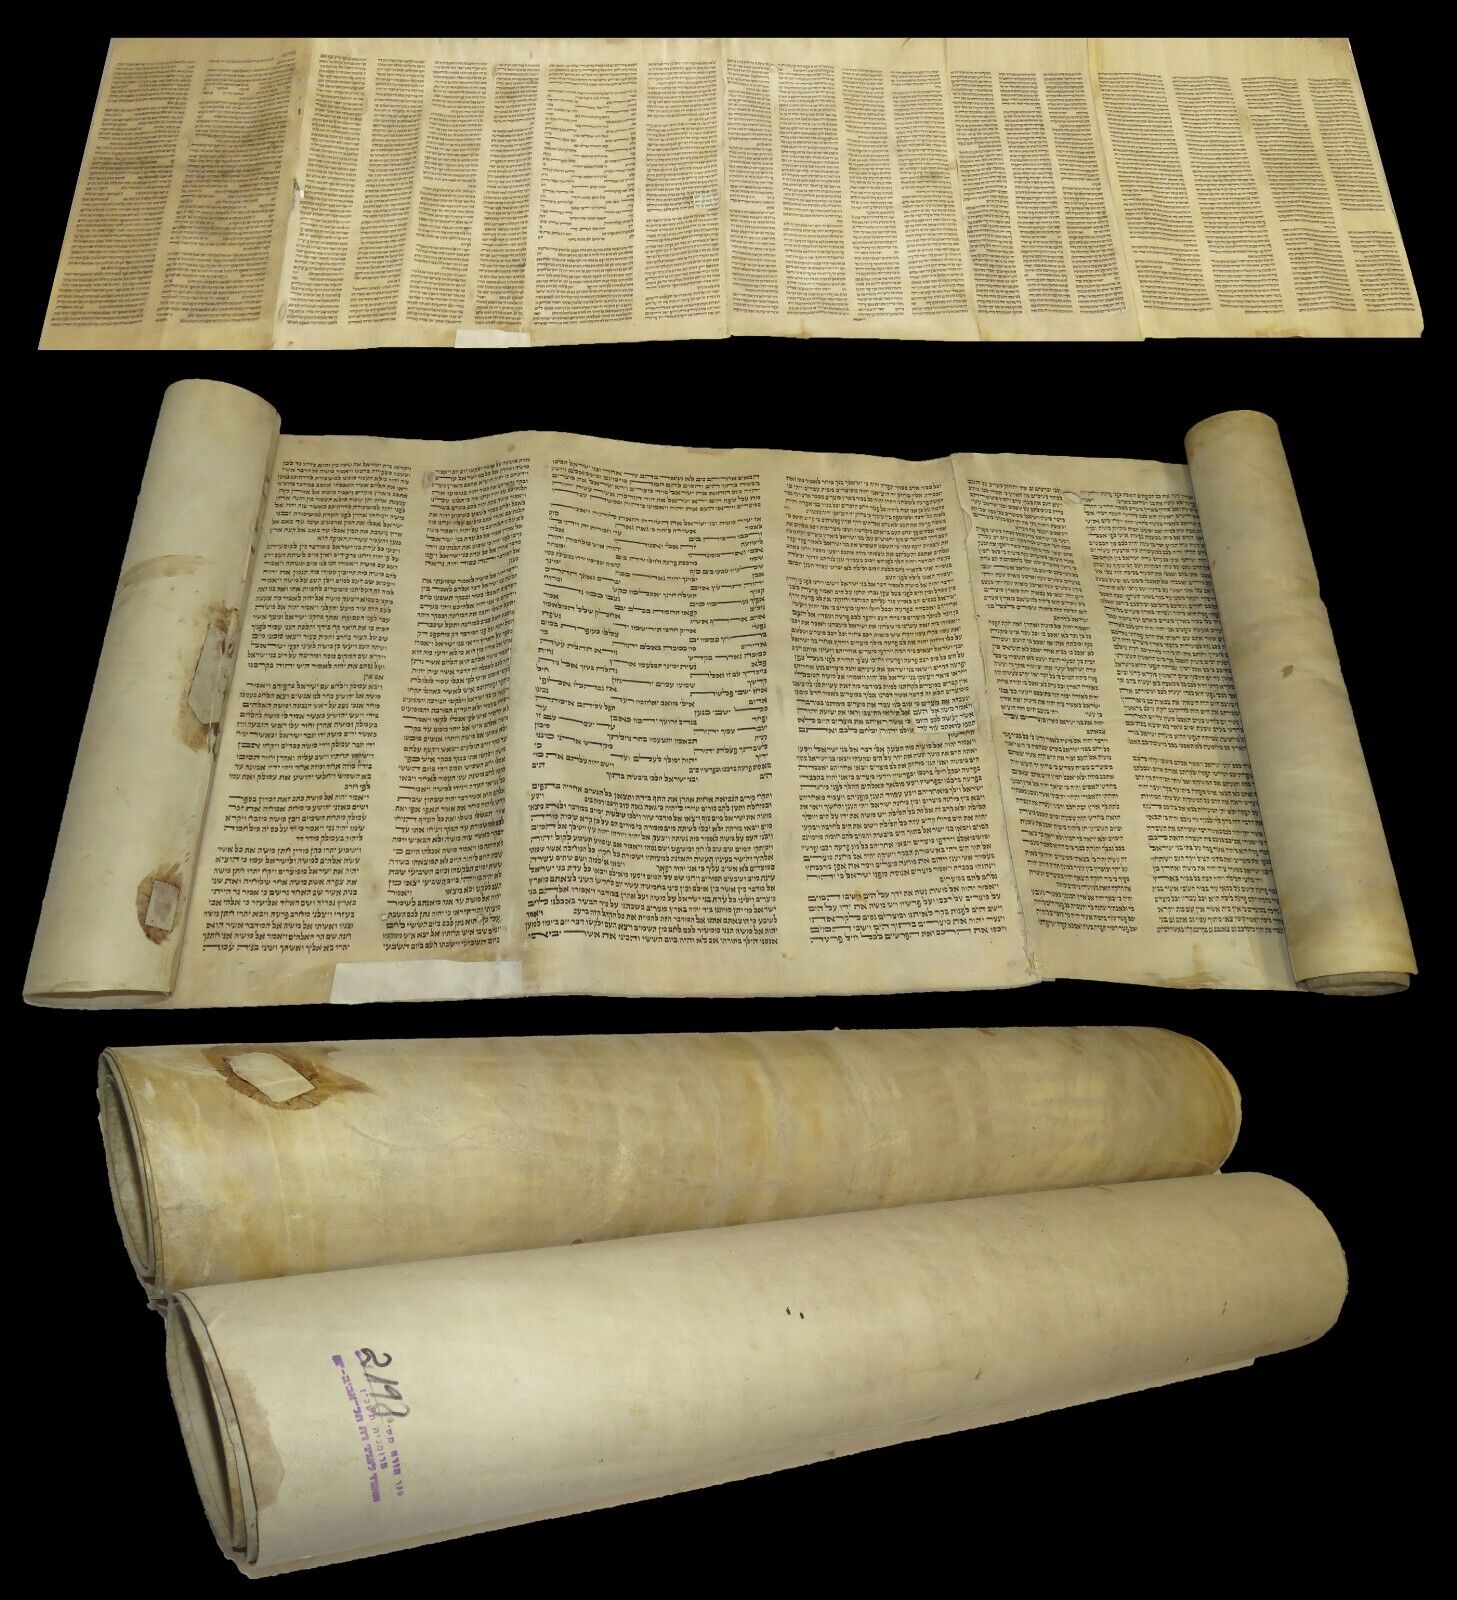 LARGE RARE ANCIENT TORAH BIBLE SCROLL MANUSCRIPT 150-200 YEARS OLD FROM ROMANIA